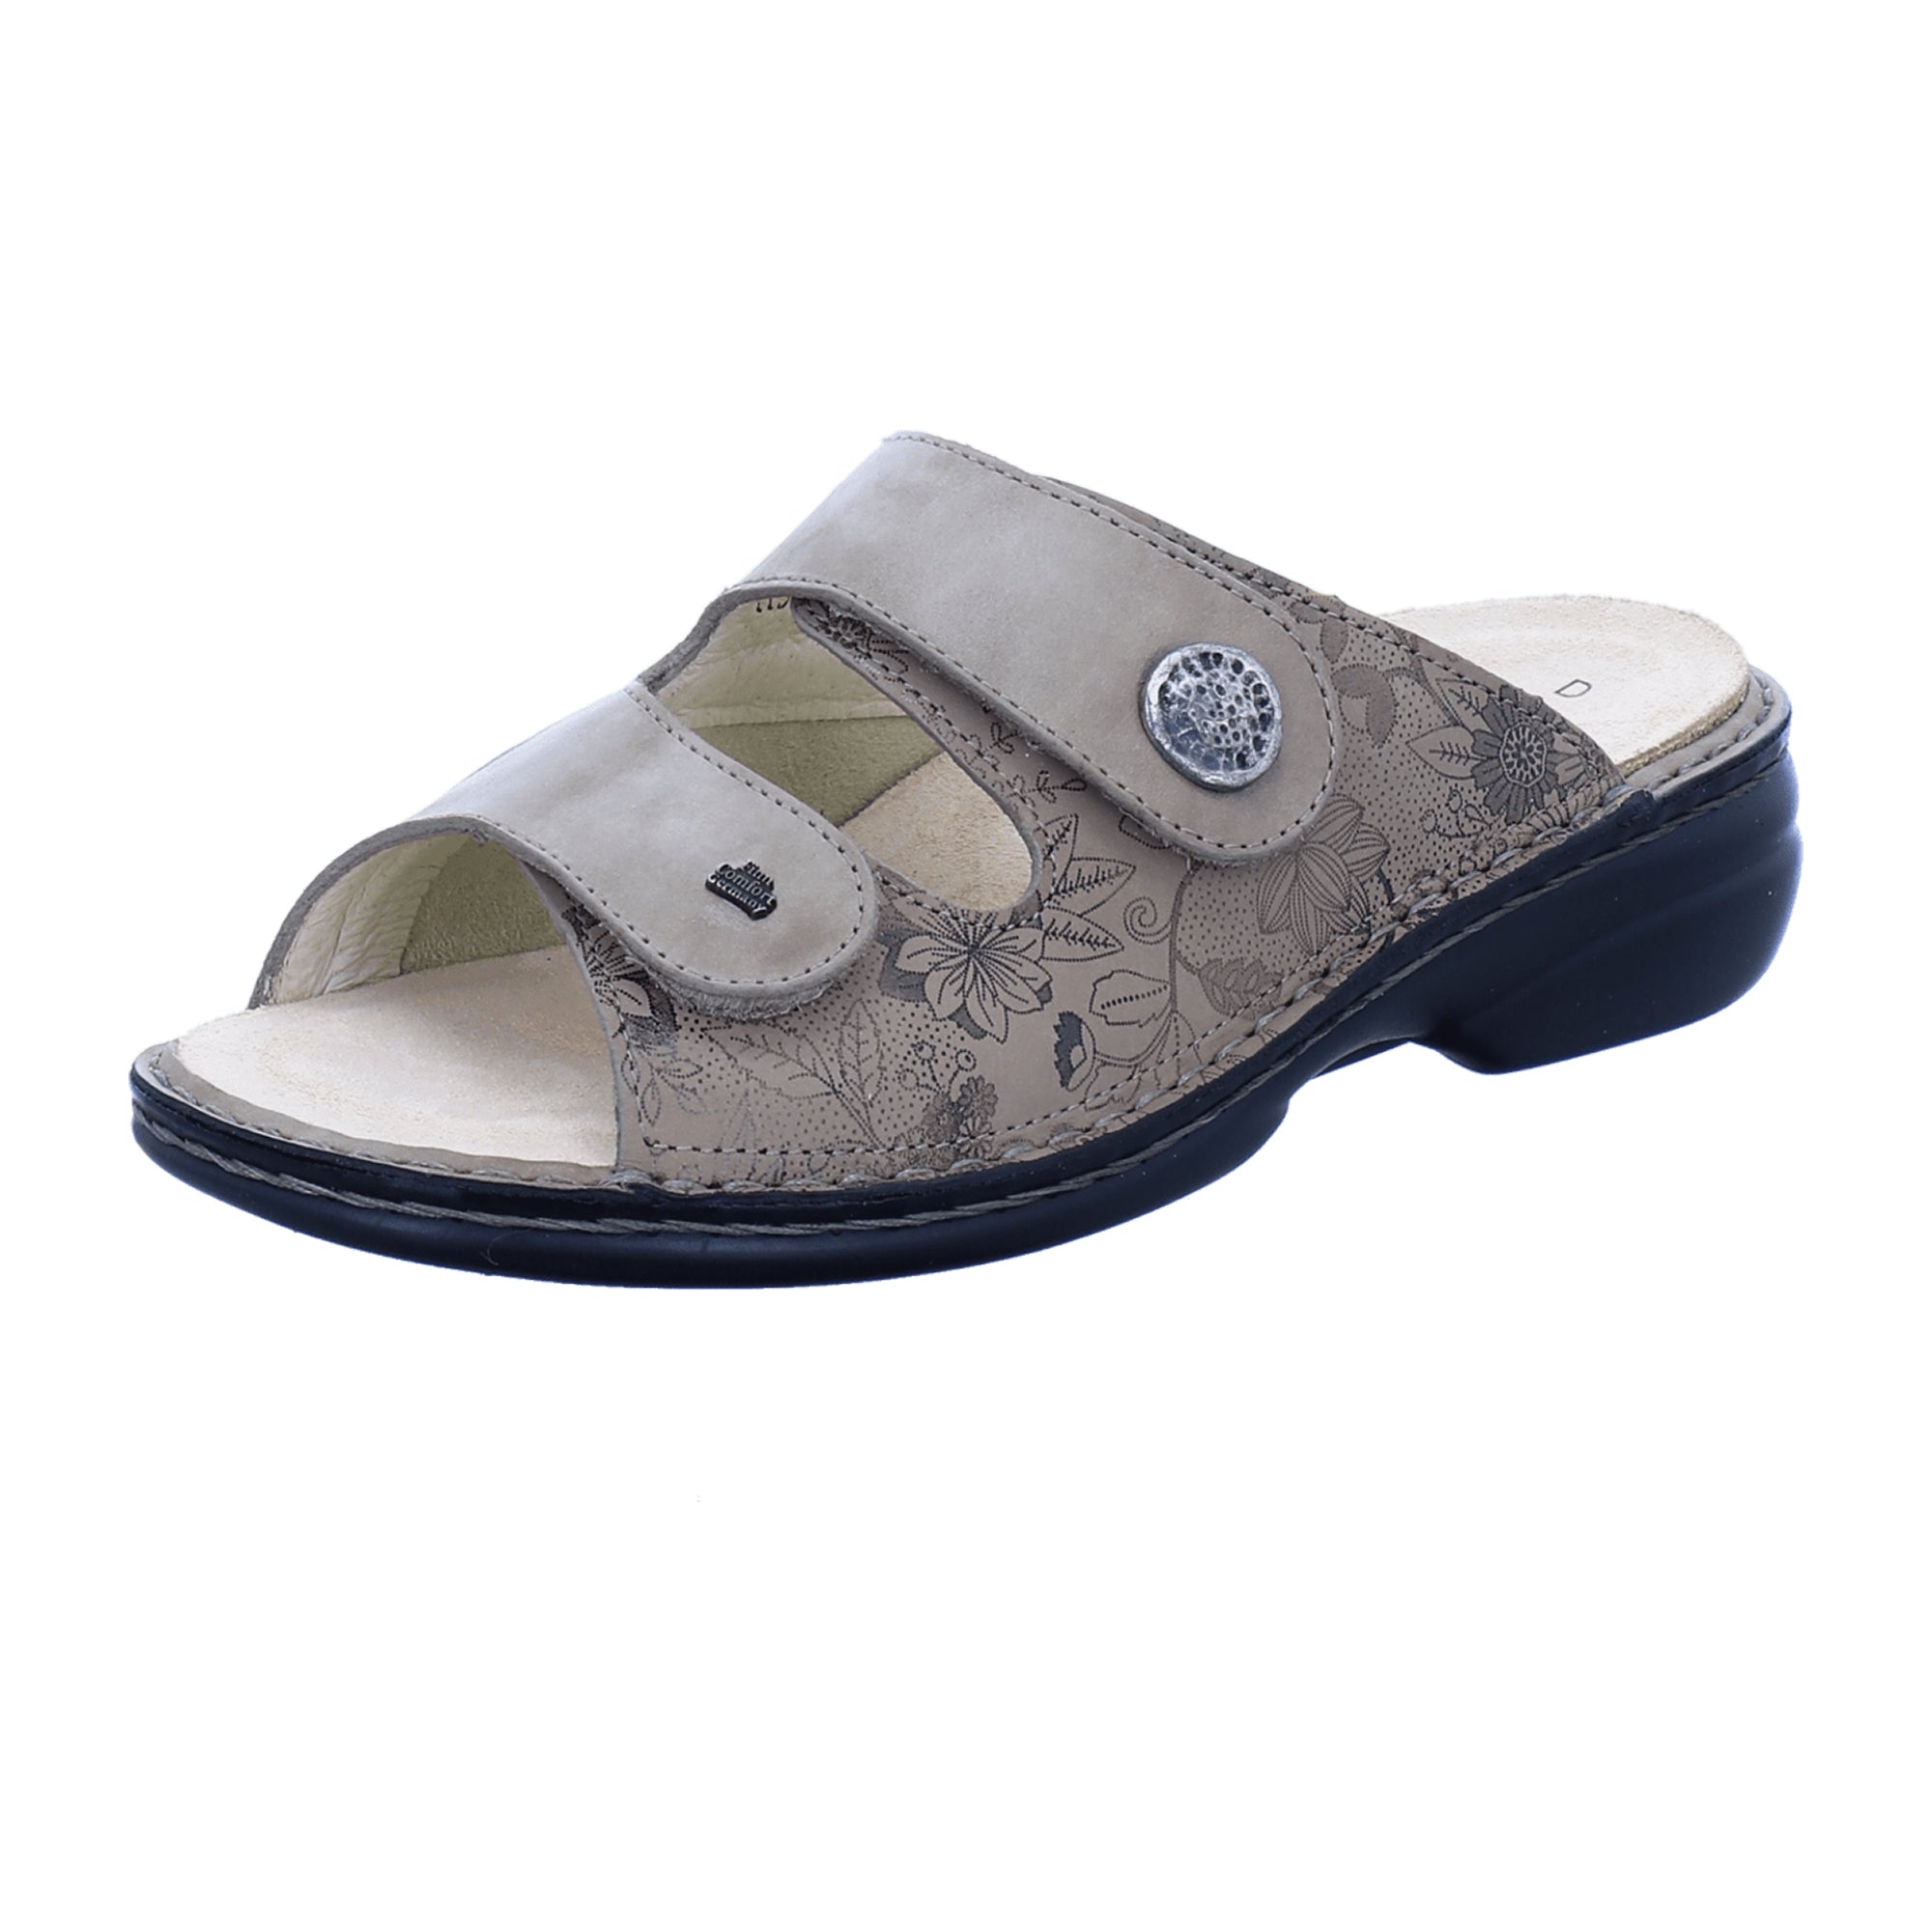 Finn Comfort Zeno Women's Sandals - Stylish & Comfortable in Beige